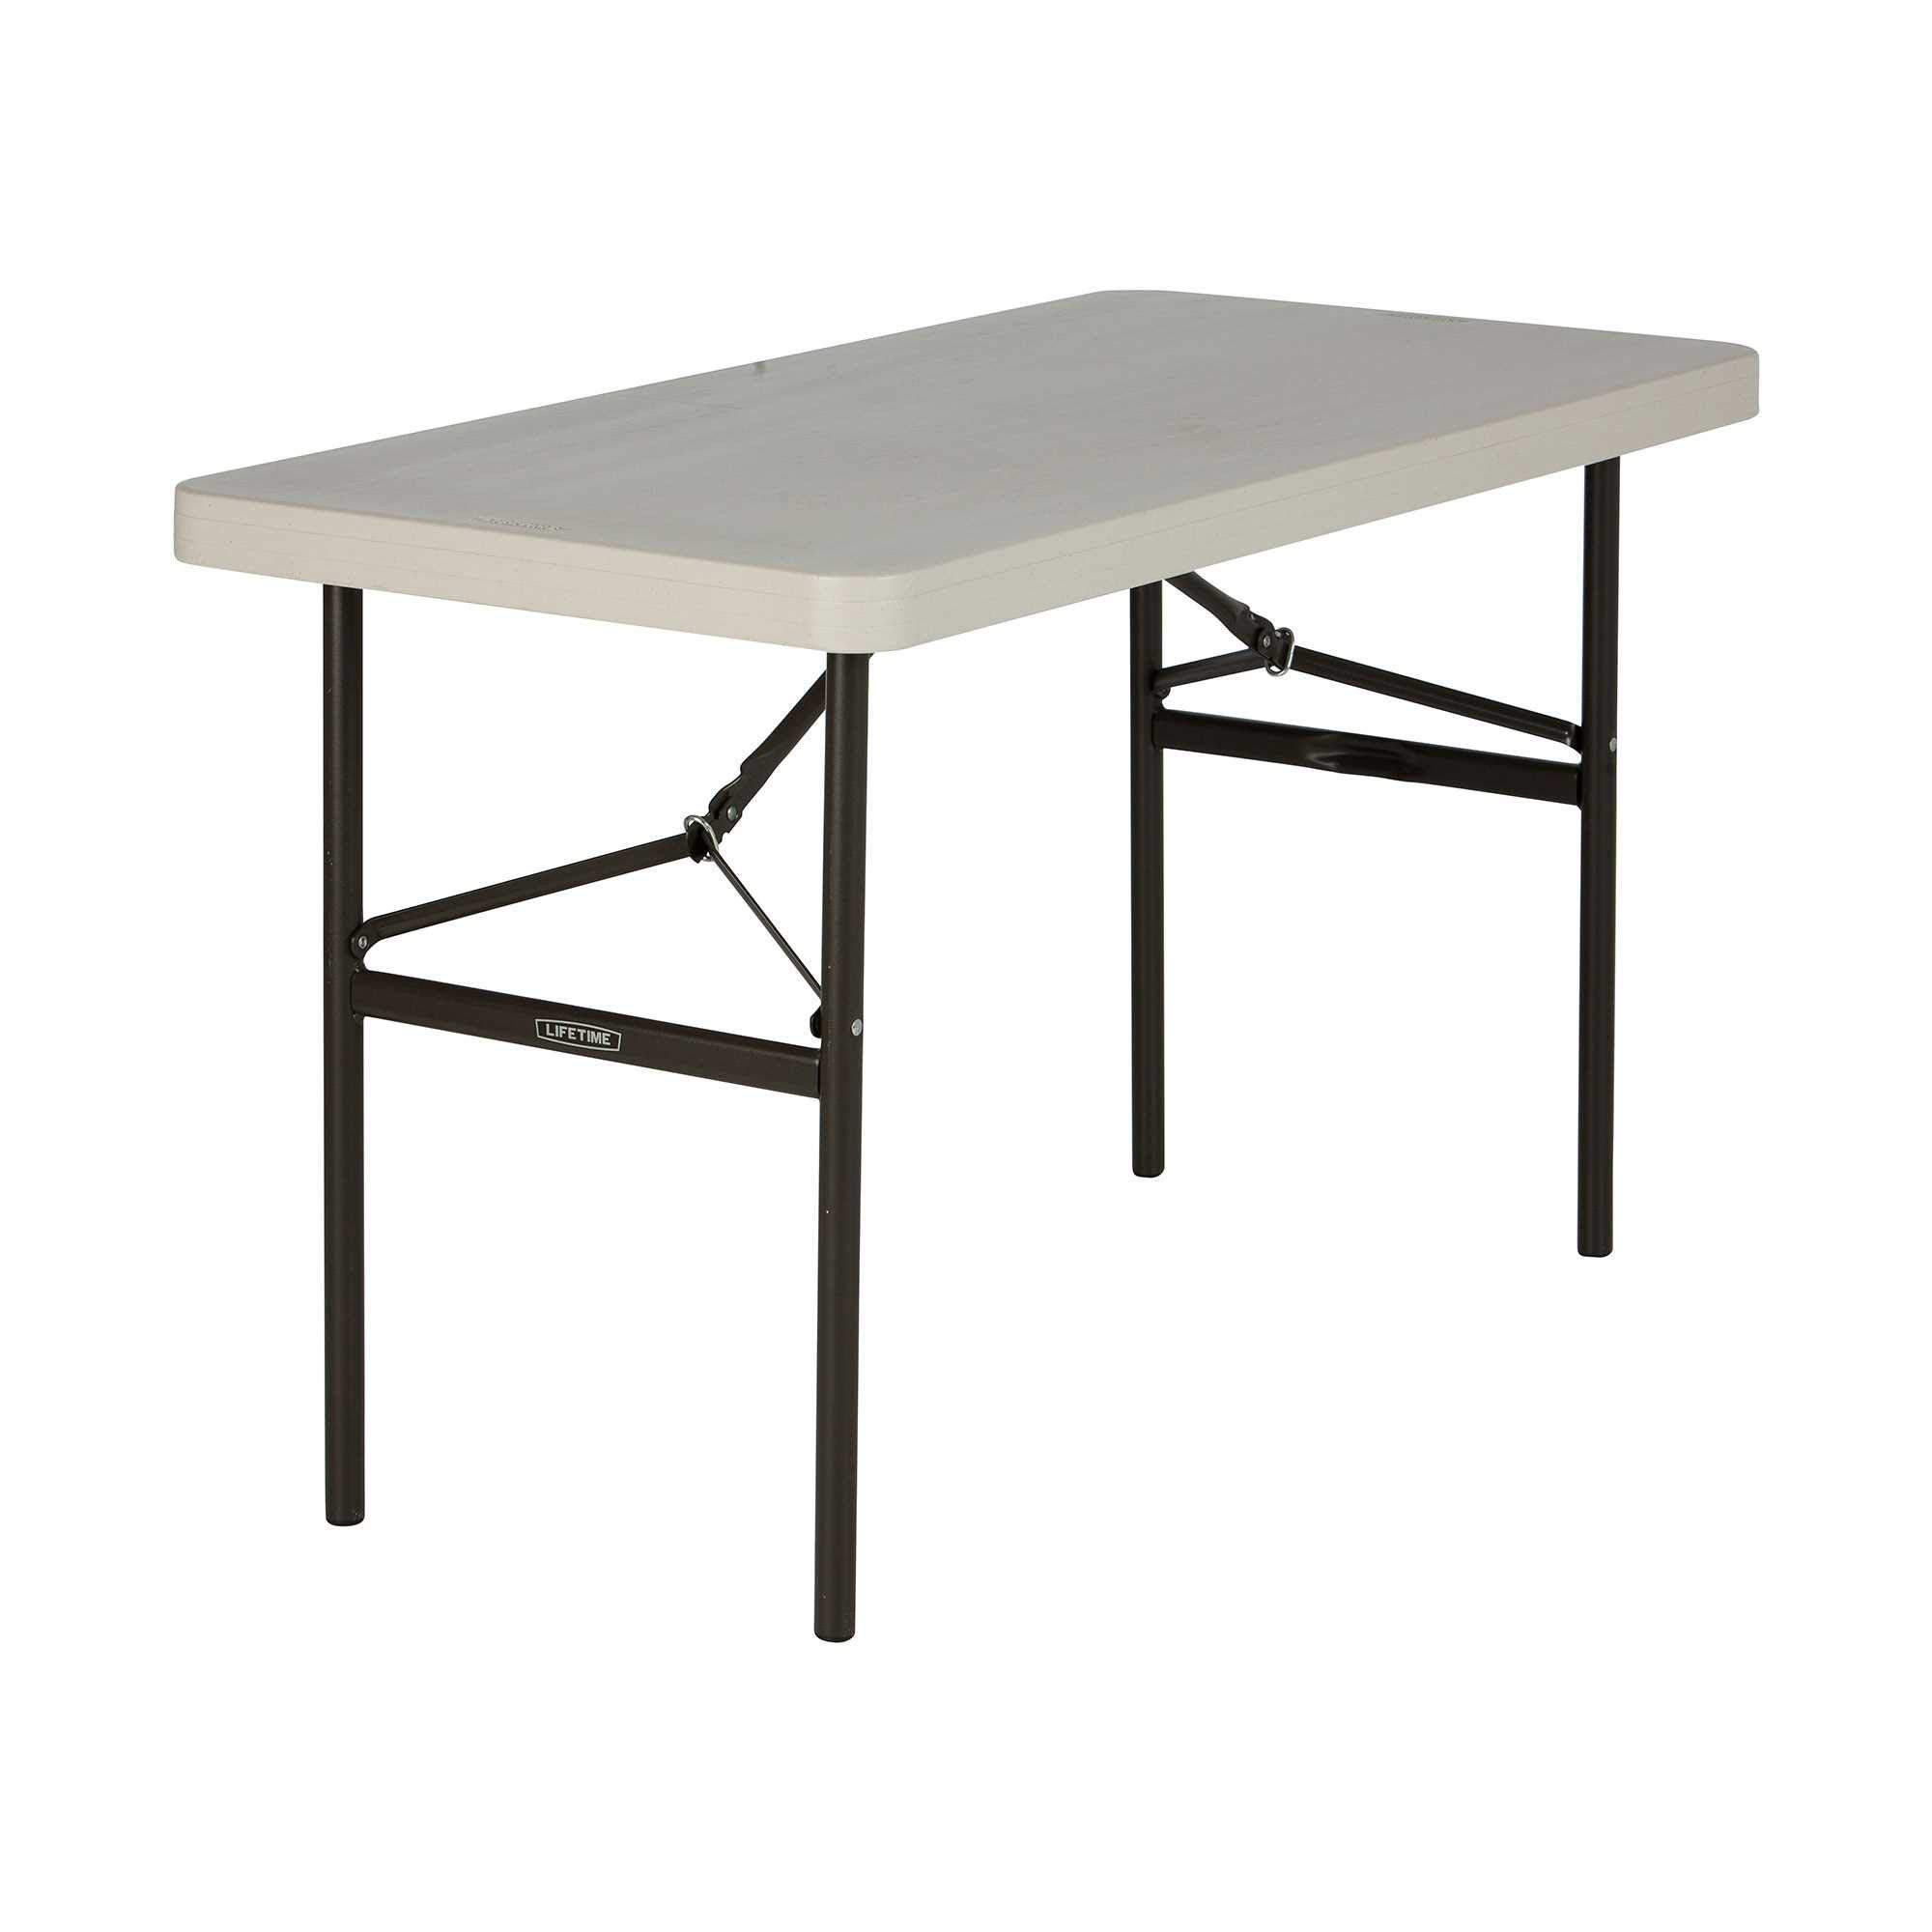 4’ Plastic Folding Table 